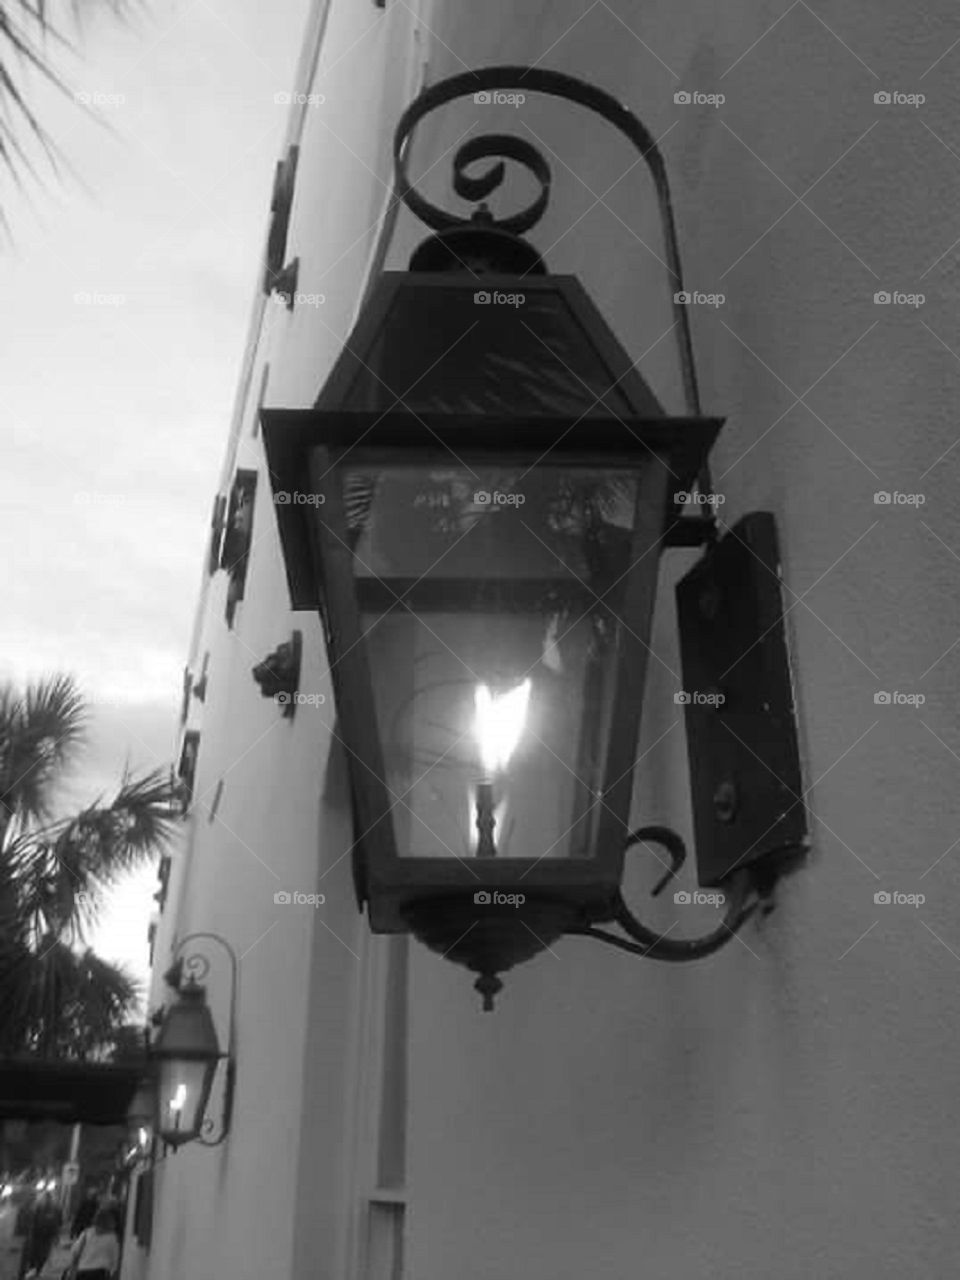 Lantern to light the way